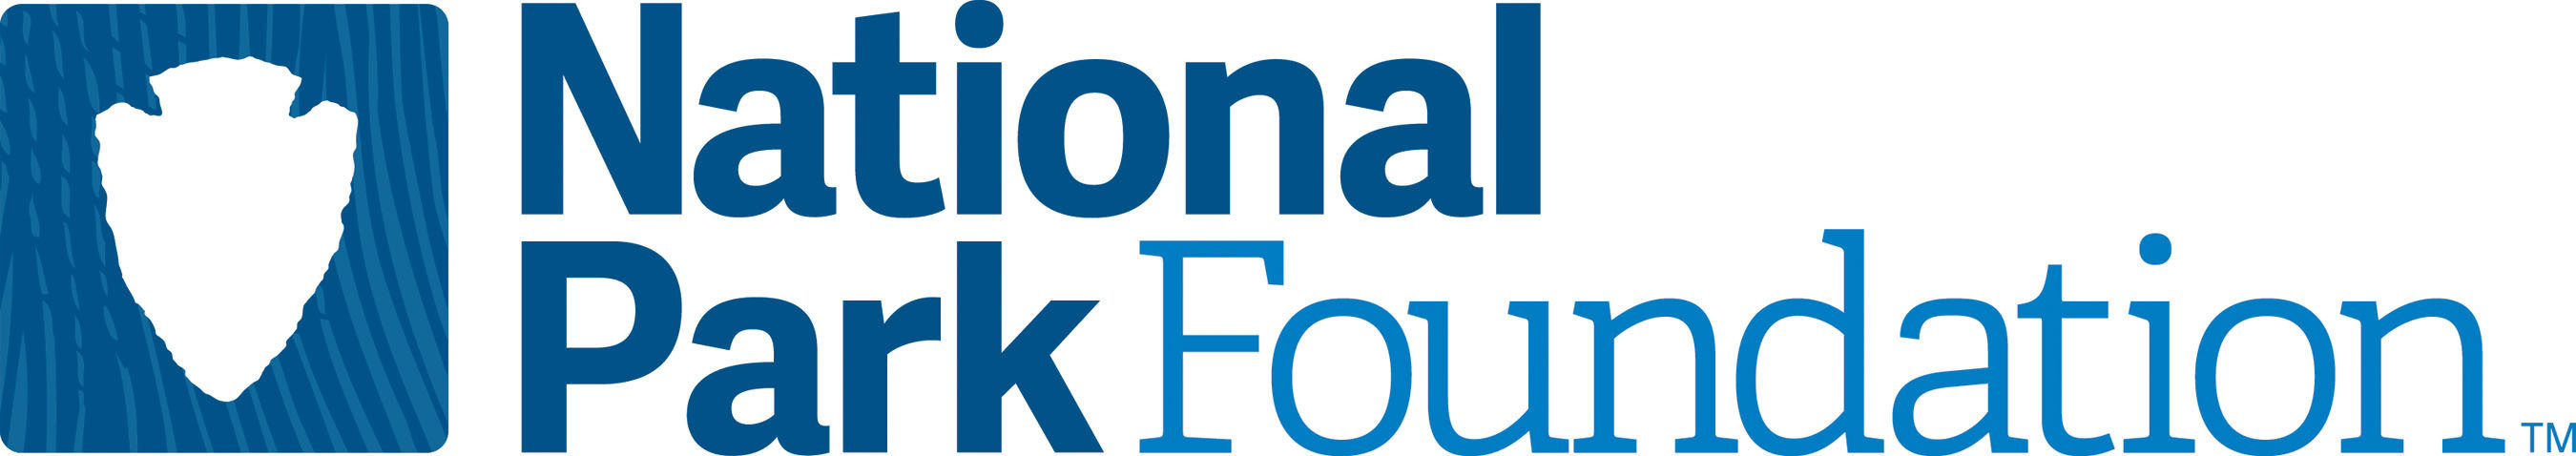 National Park Foundation.